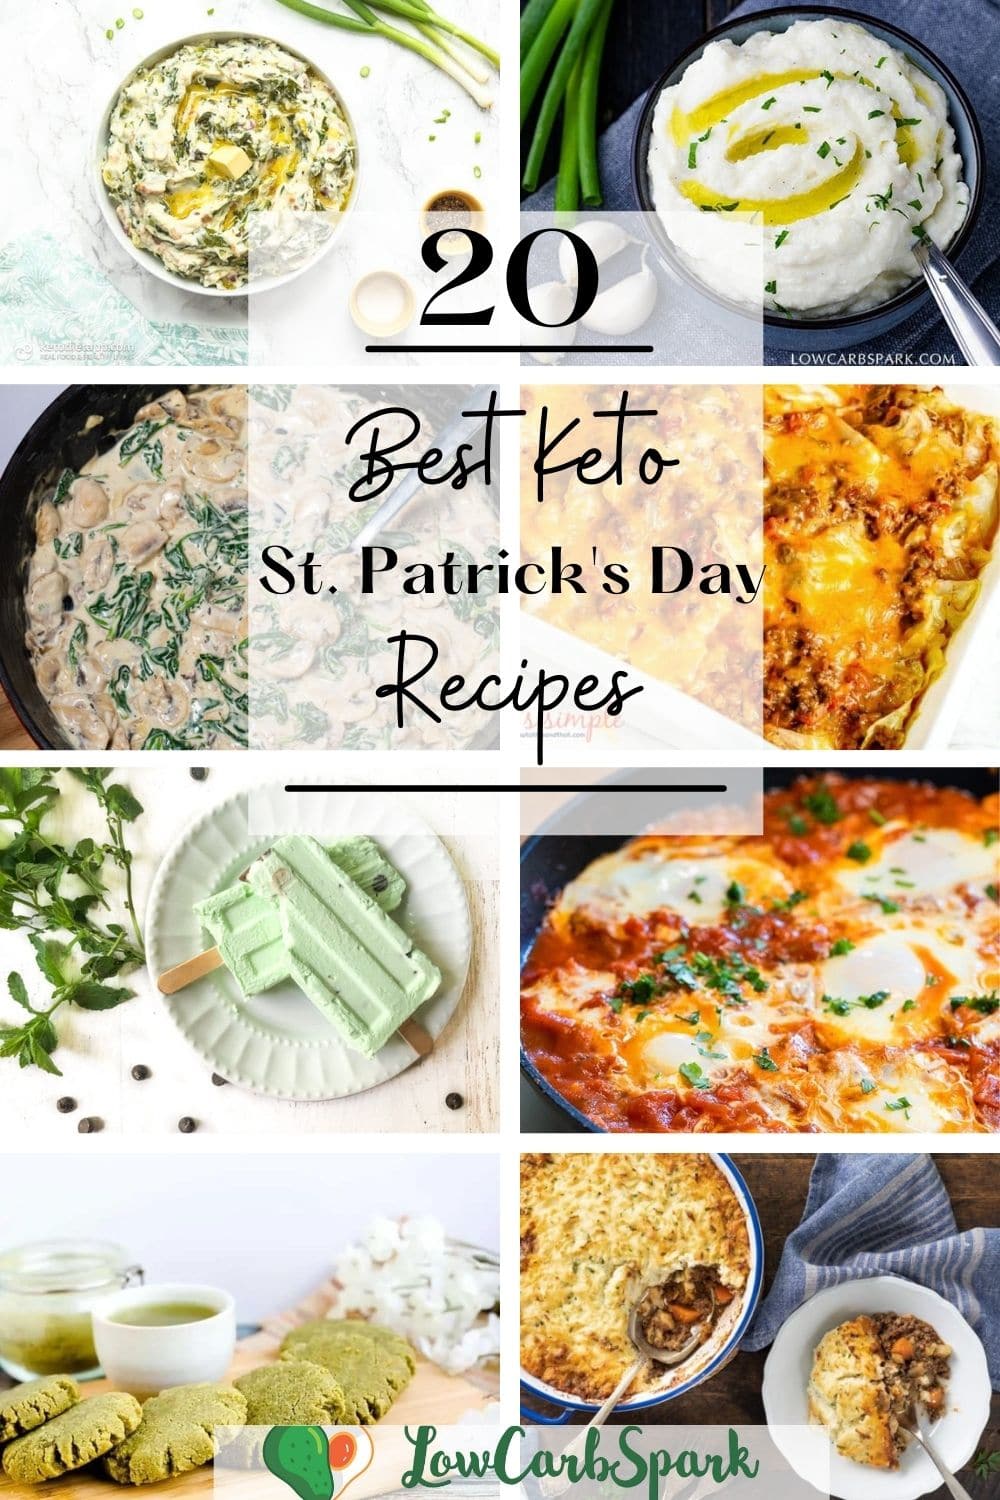 20 Best Keto St. Patrick's Day Recipes